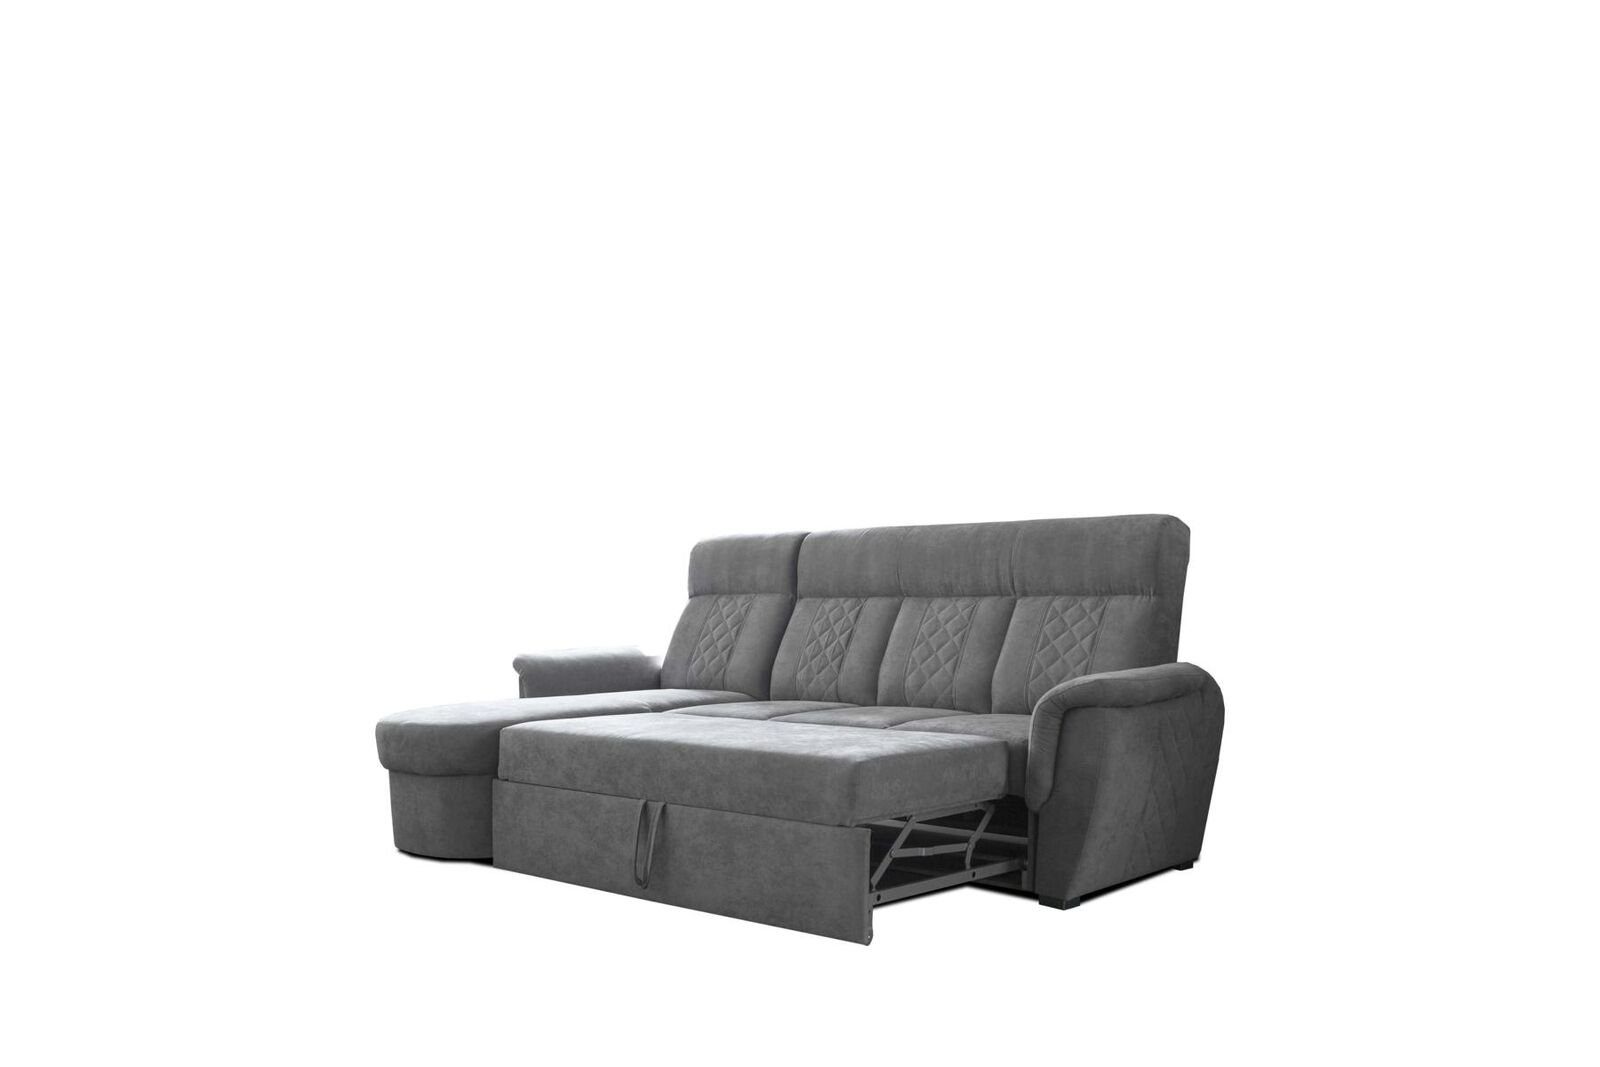 JVmoebel Ecksofa Ecksofa moderne exklusive hochwertige L-Form, Sofas Design Grau Mit Sofas Bettfunktion